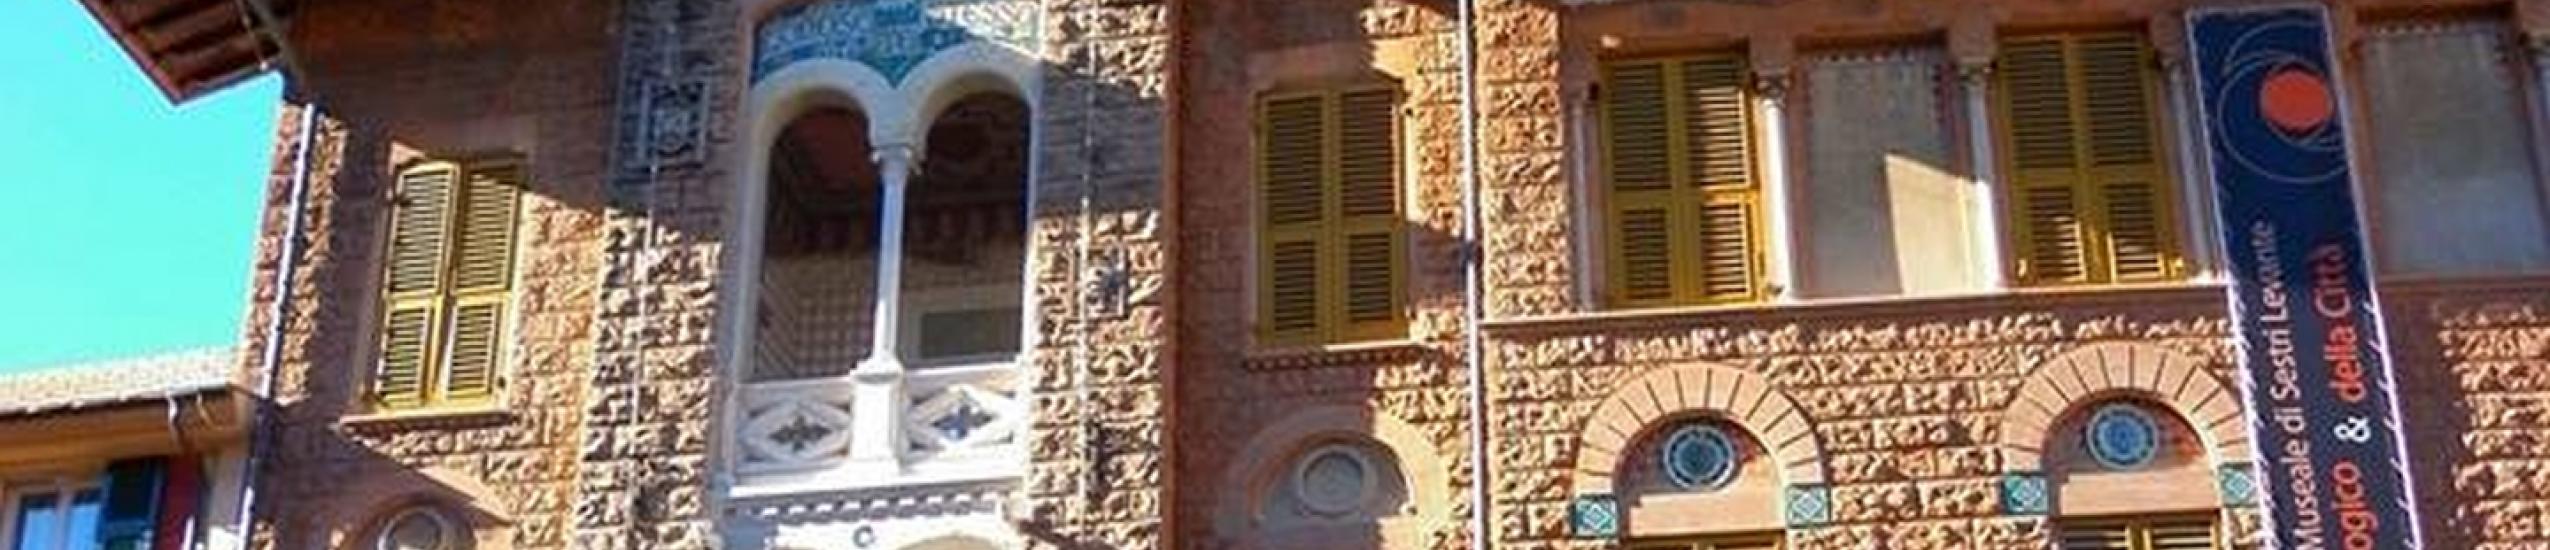 Palazzo Fascie-Rossi (ingresso biblioteca) 